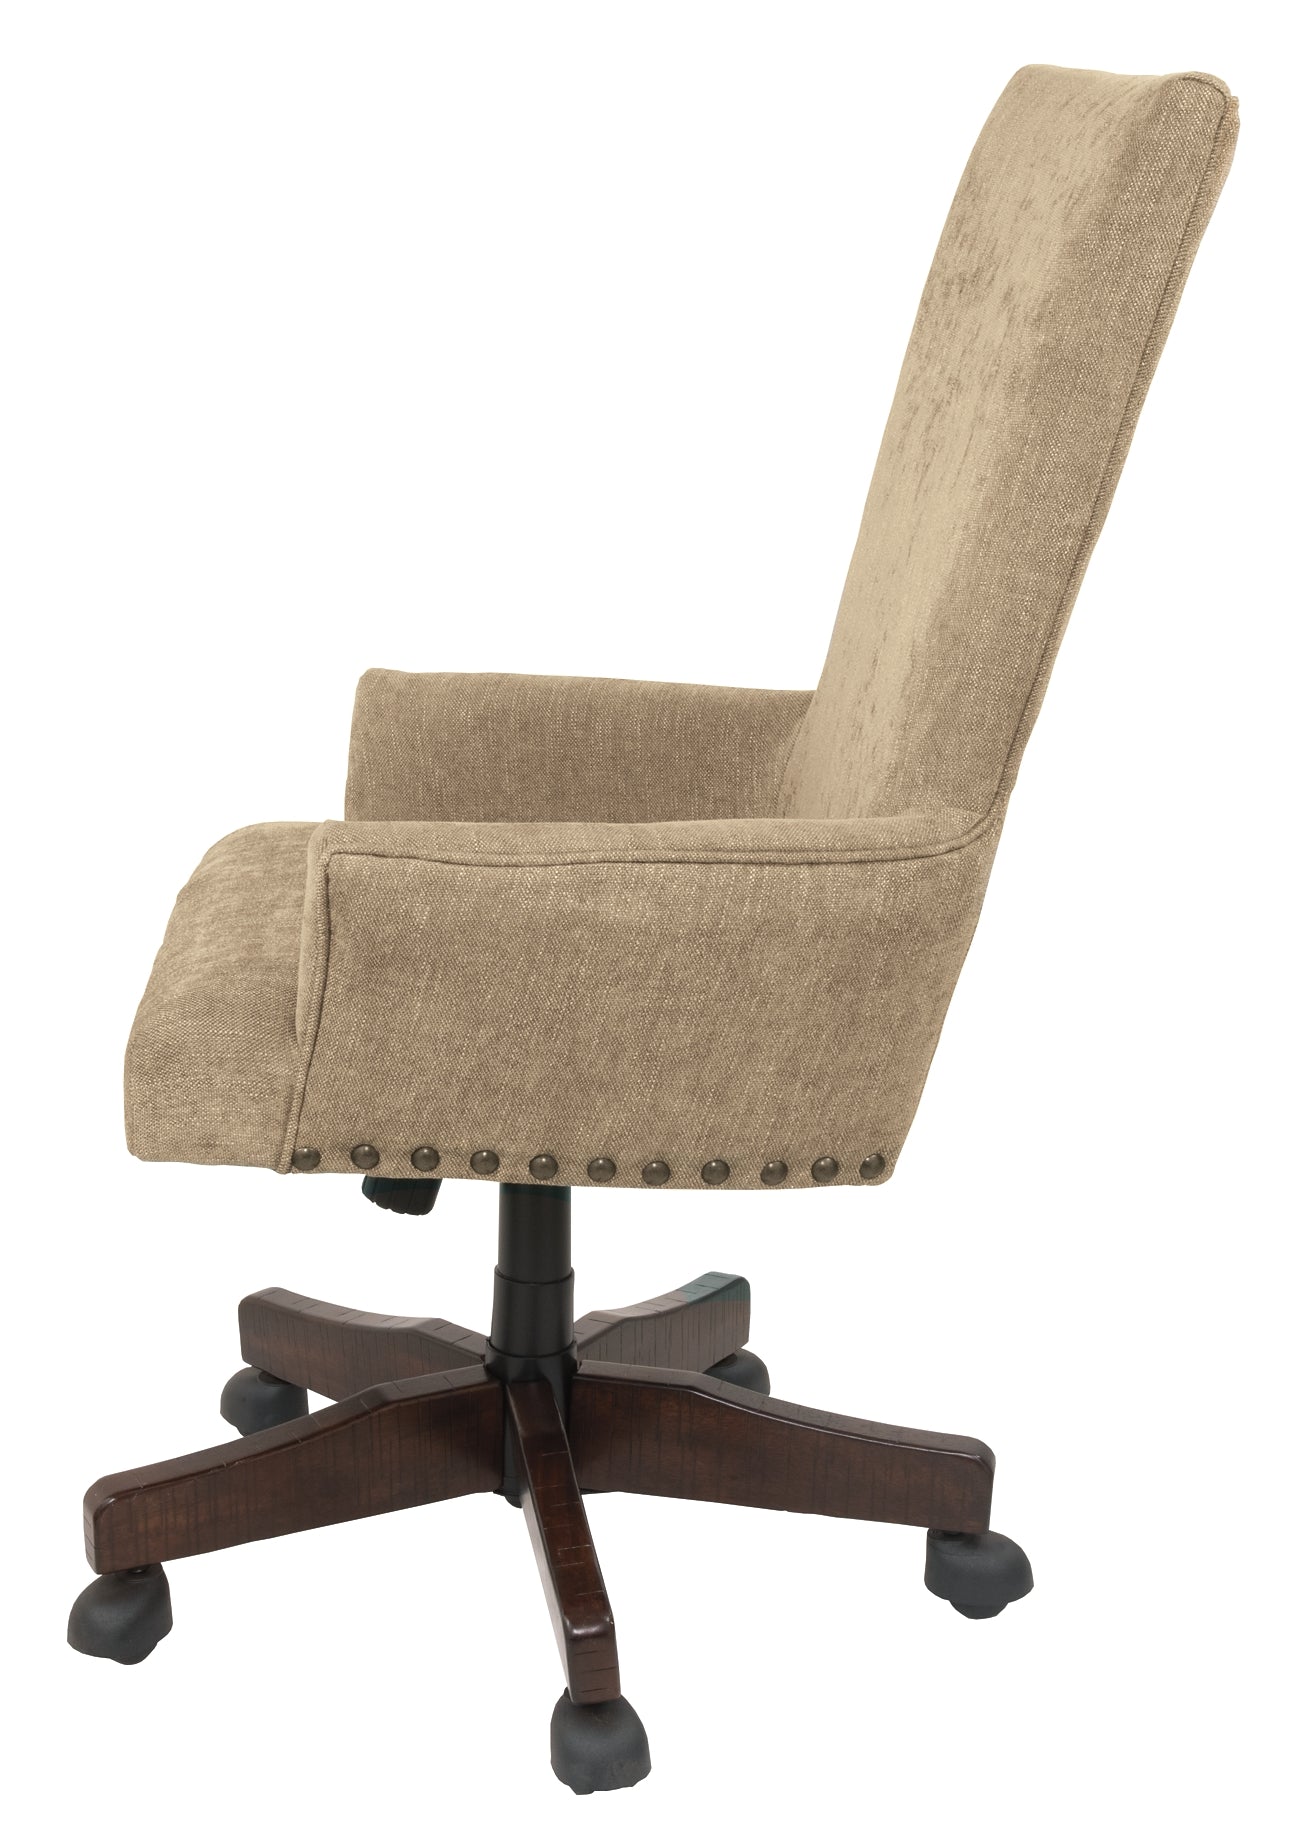 Baldridge UPH Swivel Desk Chair